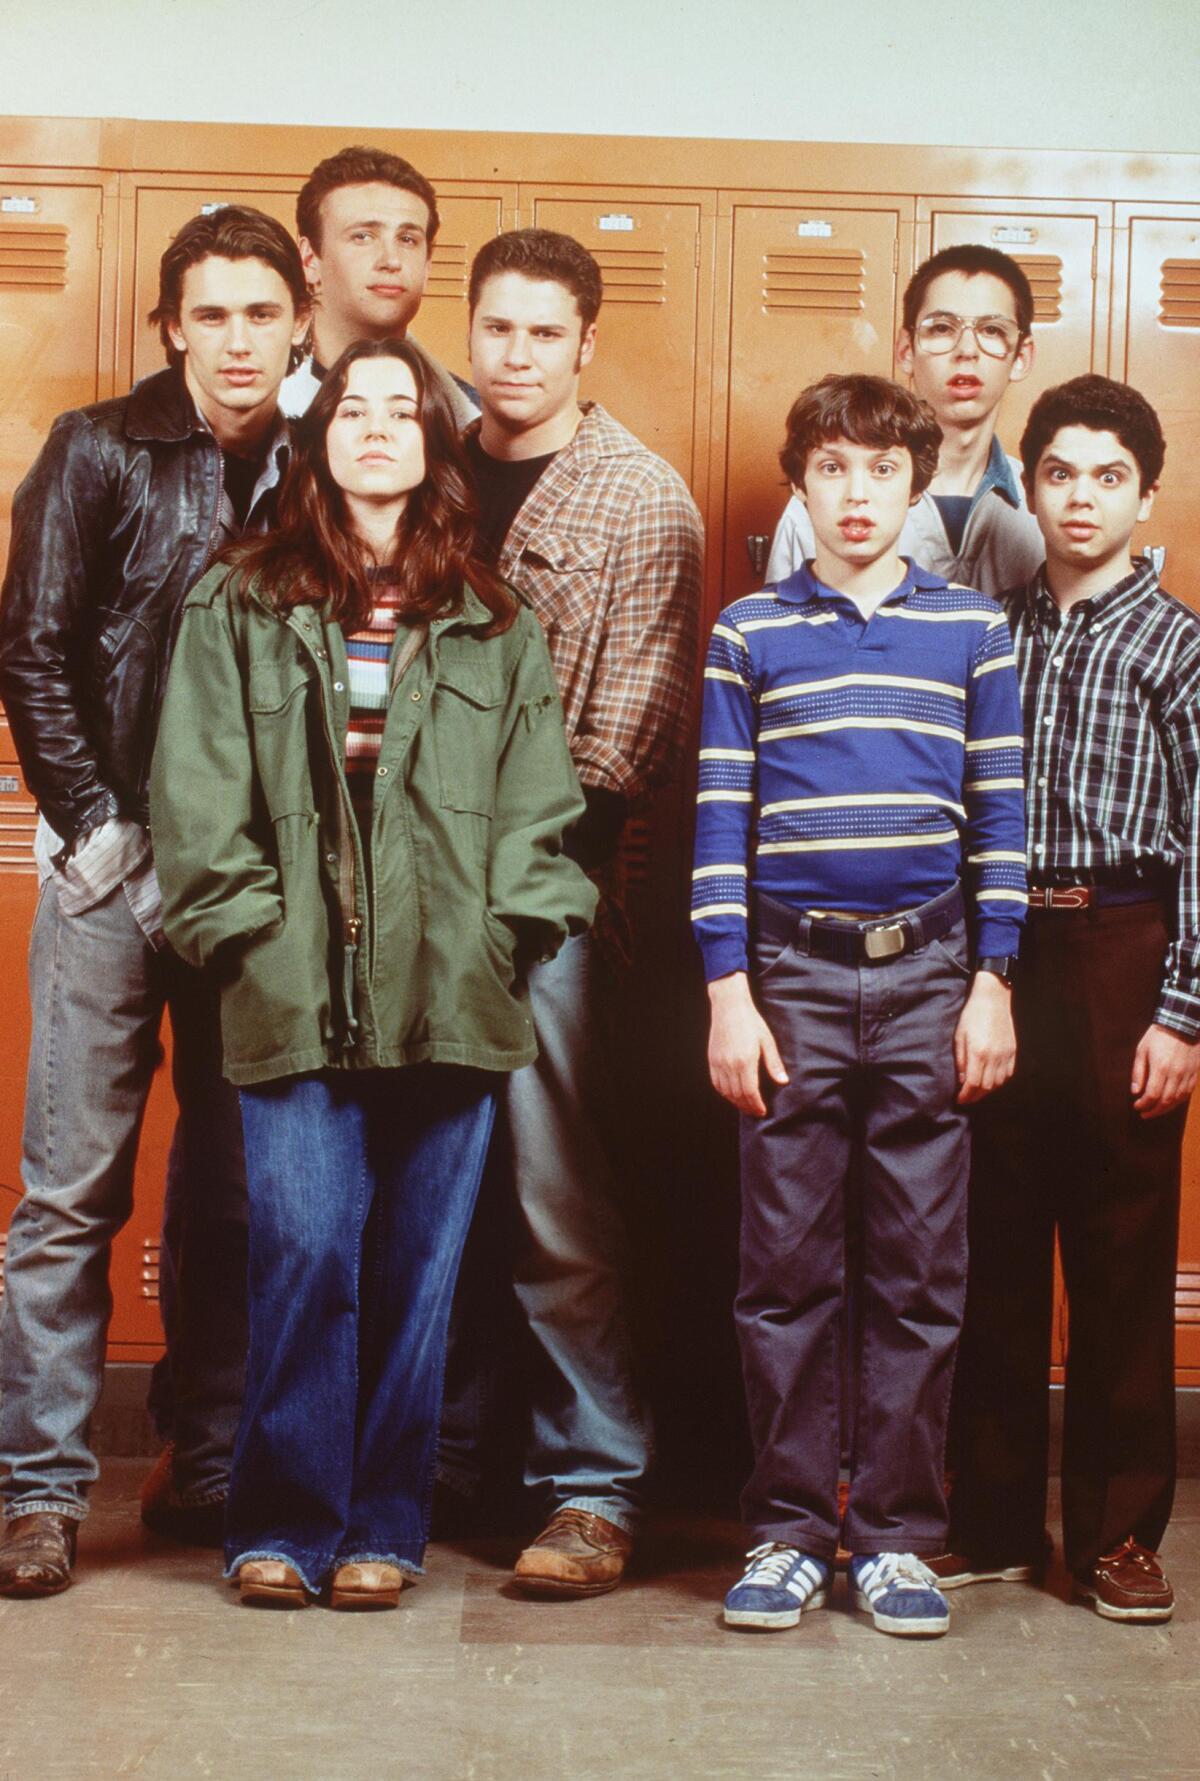 The cast of "Freaks And Geeks" standing against orange lockers.